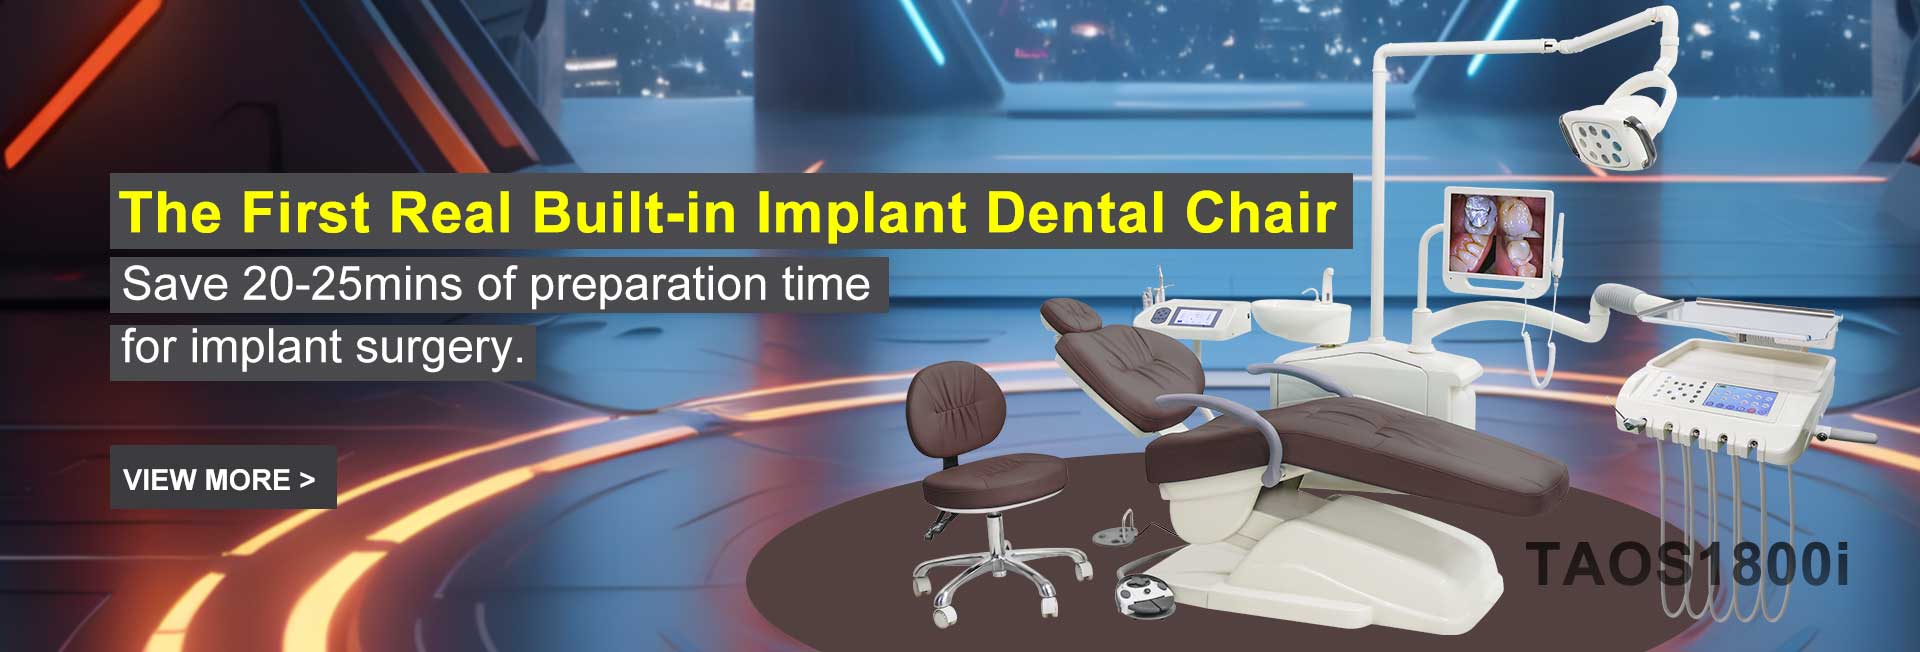 Scaun chirurgical implant dentar TAOS1800i